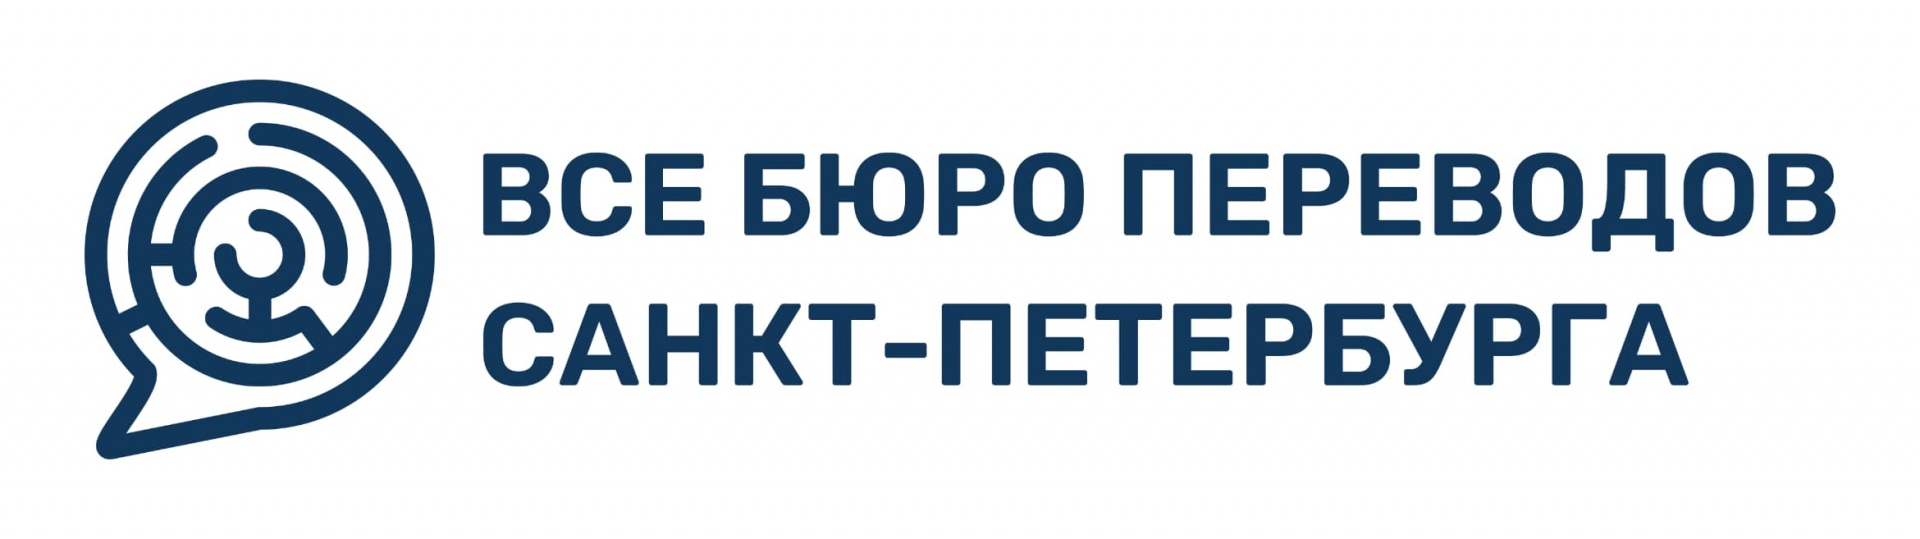 Синий логотип с текстом